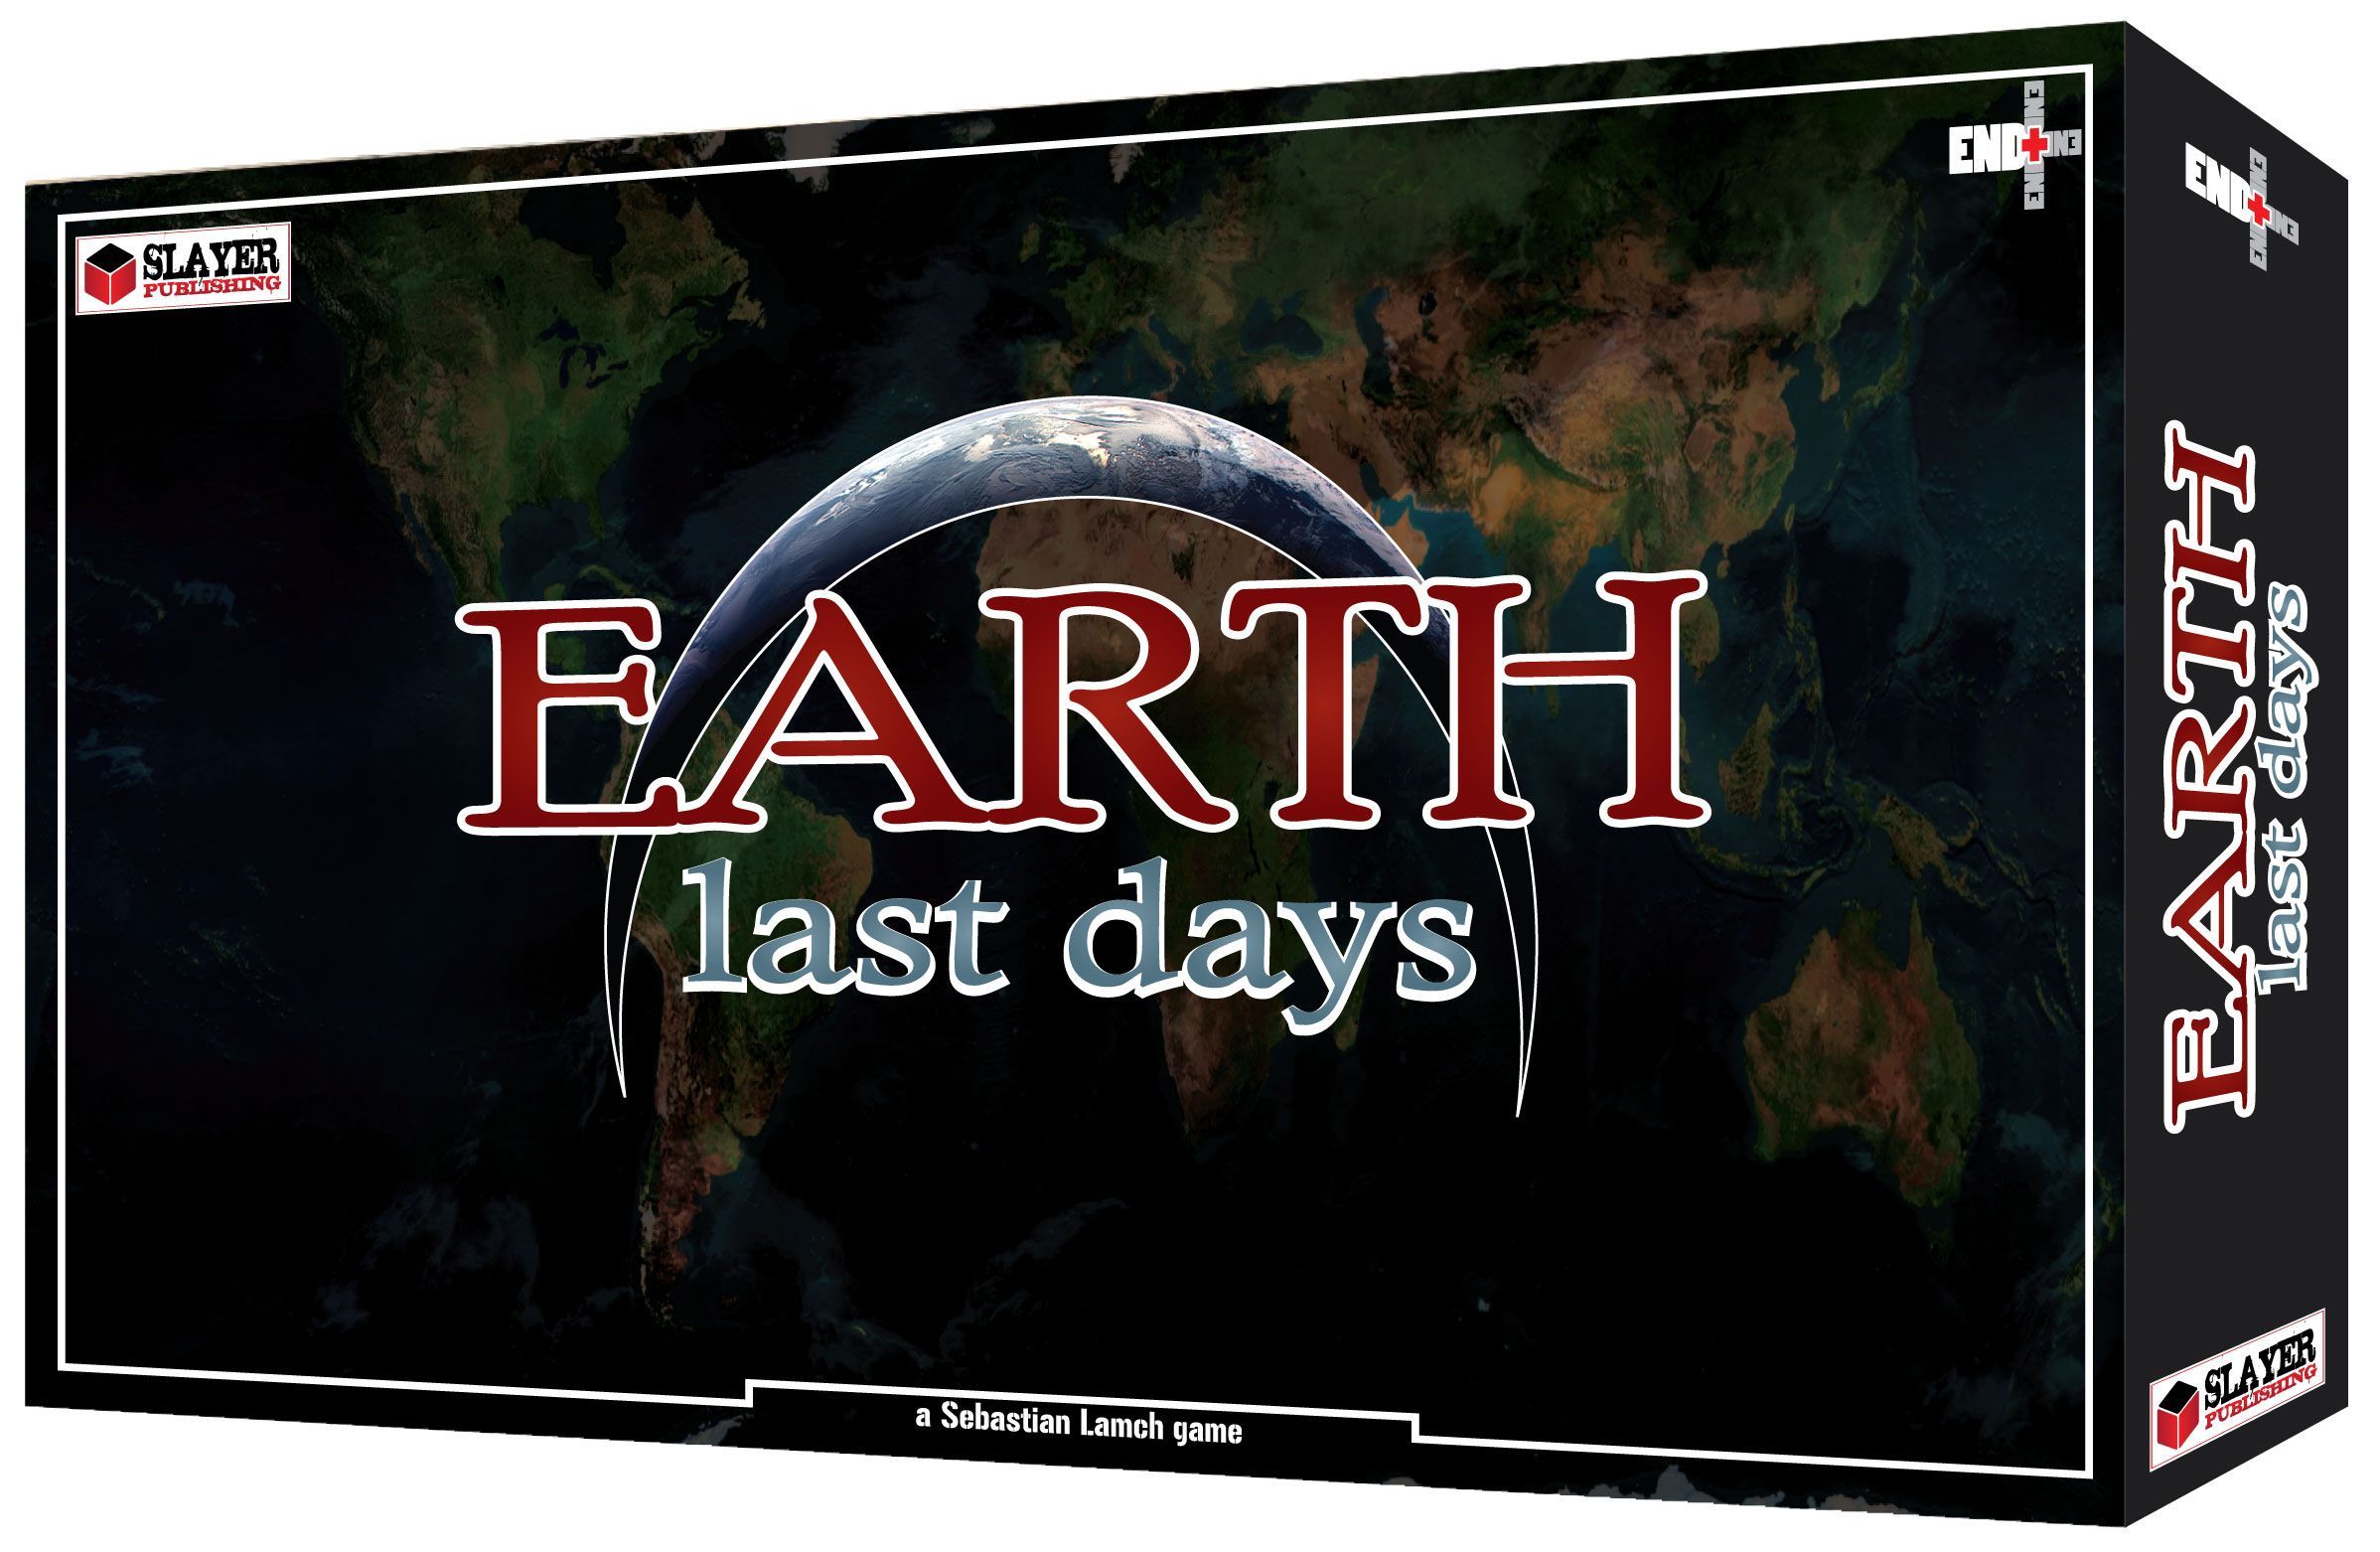 Earth: Last Days